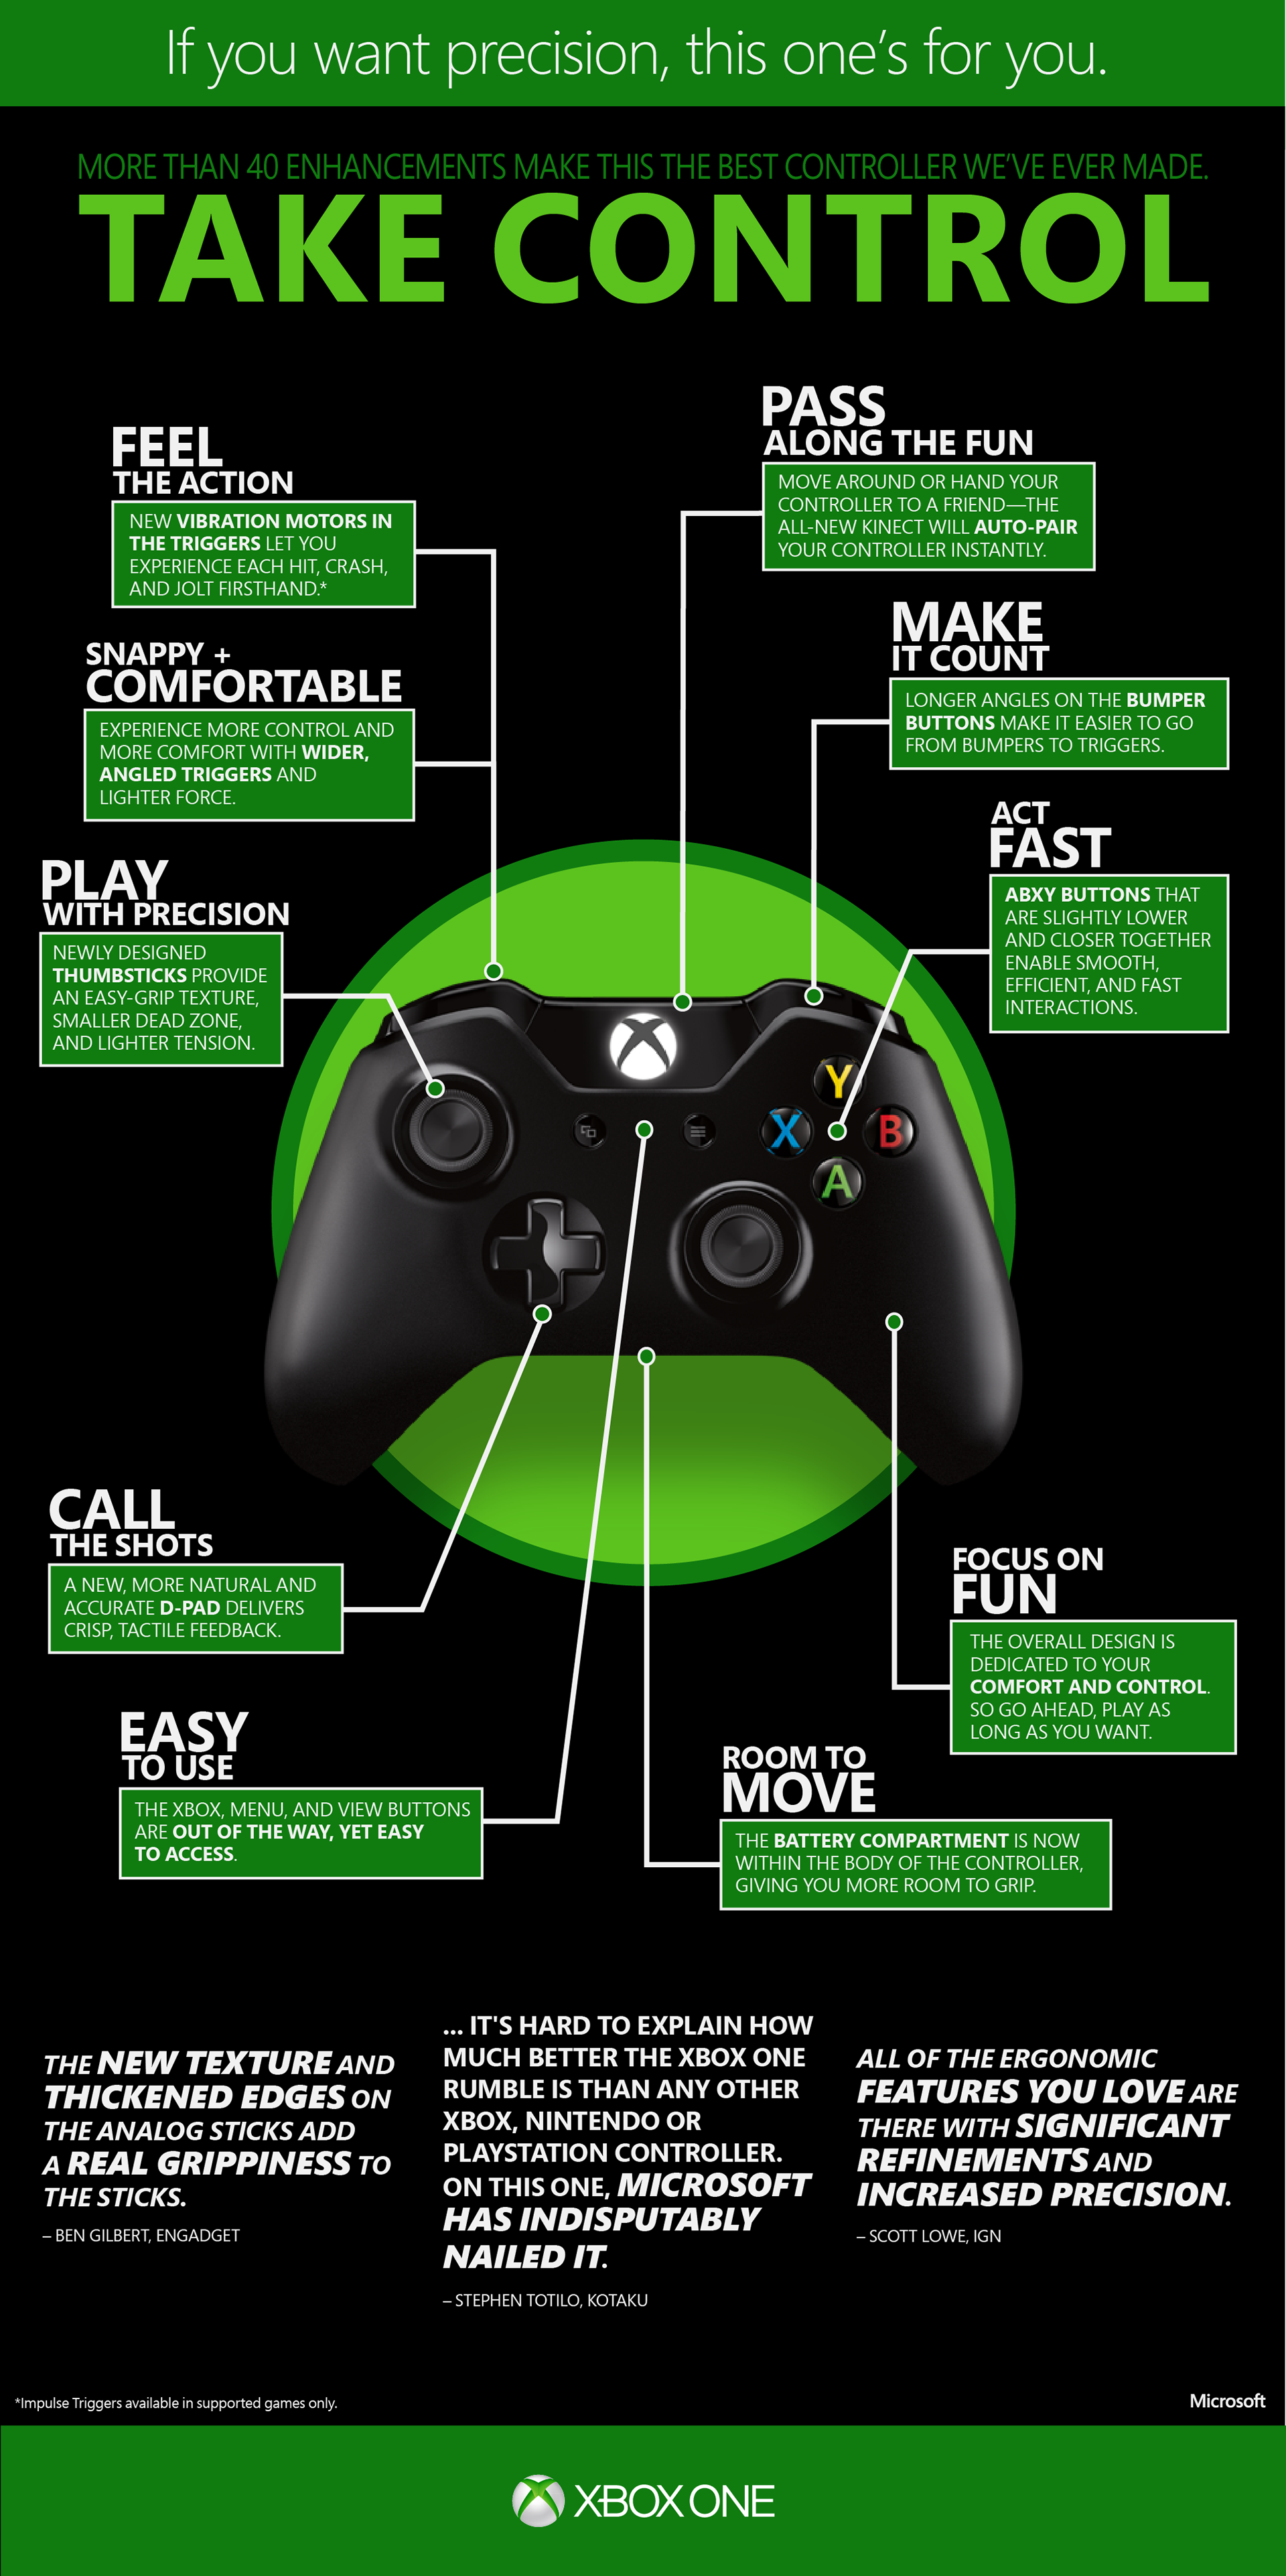 Infographic Showing Xbox Studio Growth